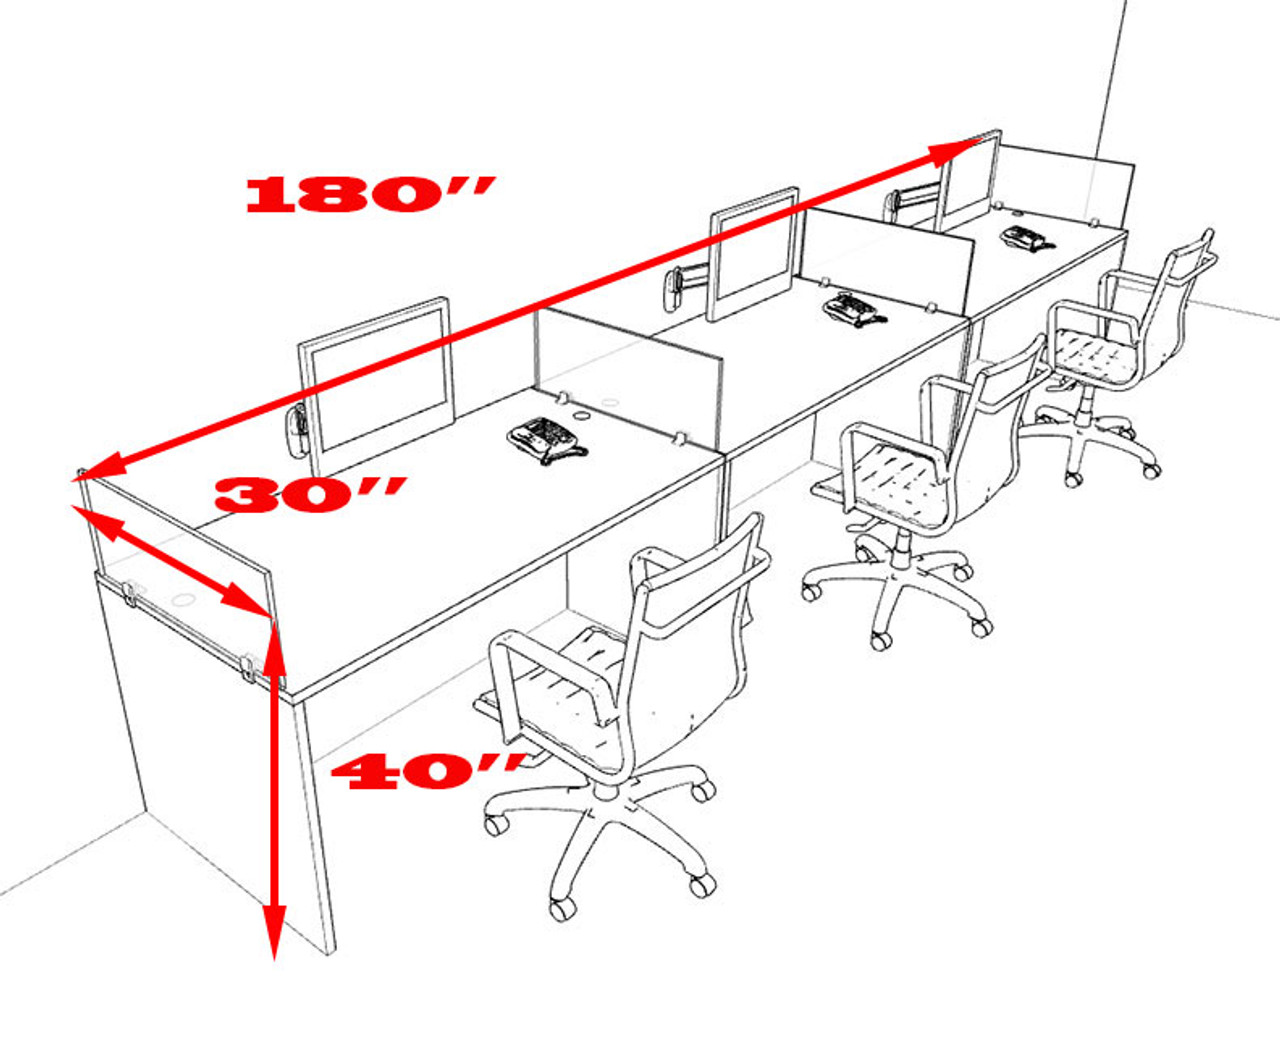 Three Person Modern Divider Office Workstation Desk Set, #OT-SUL-SPO66